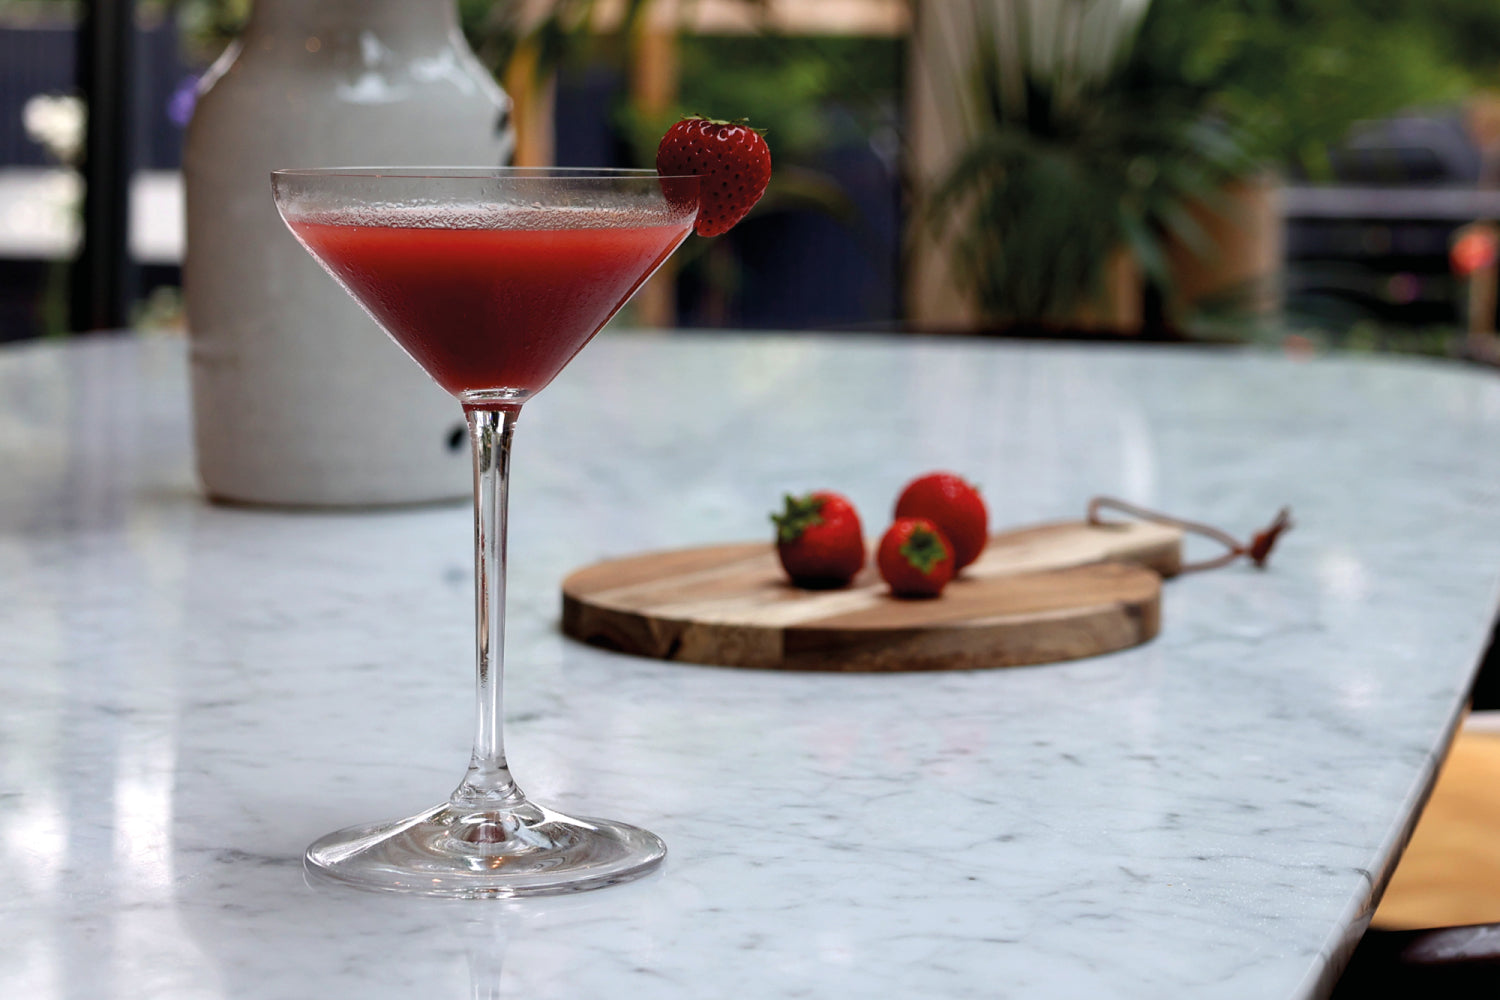 Summer cocktails: start slicing the strawberries!